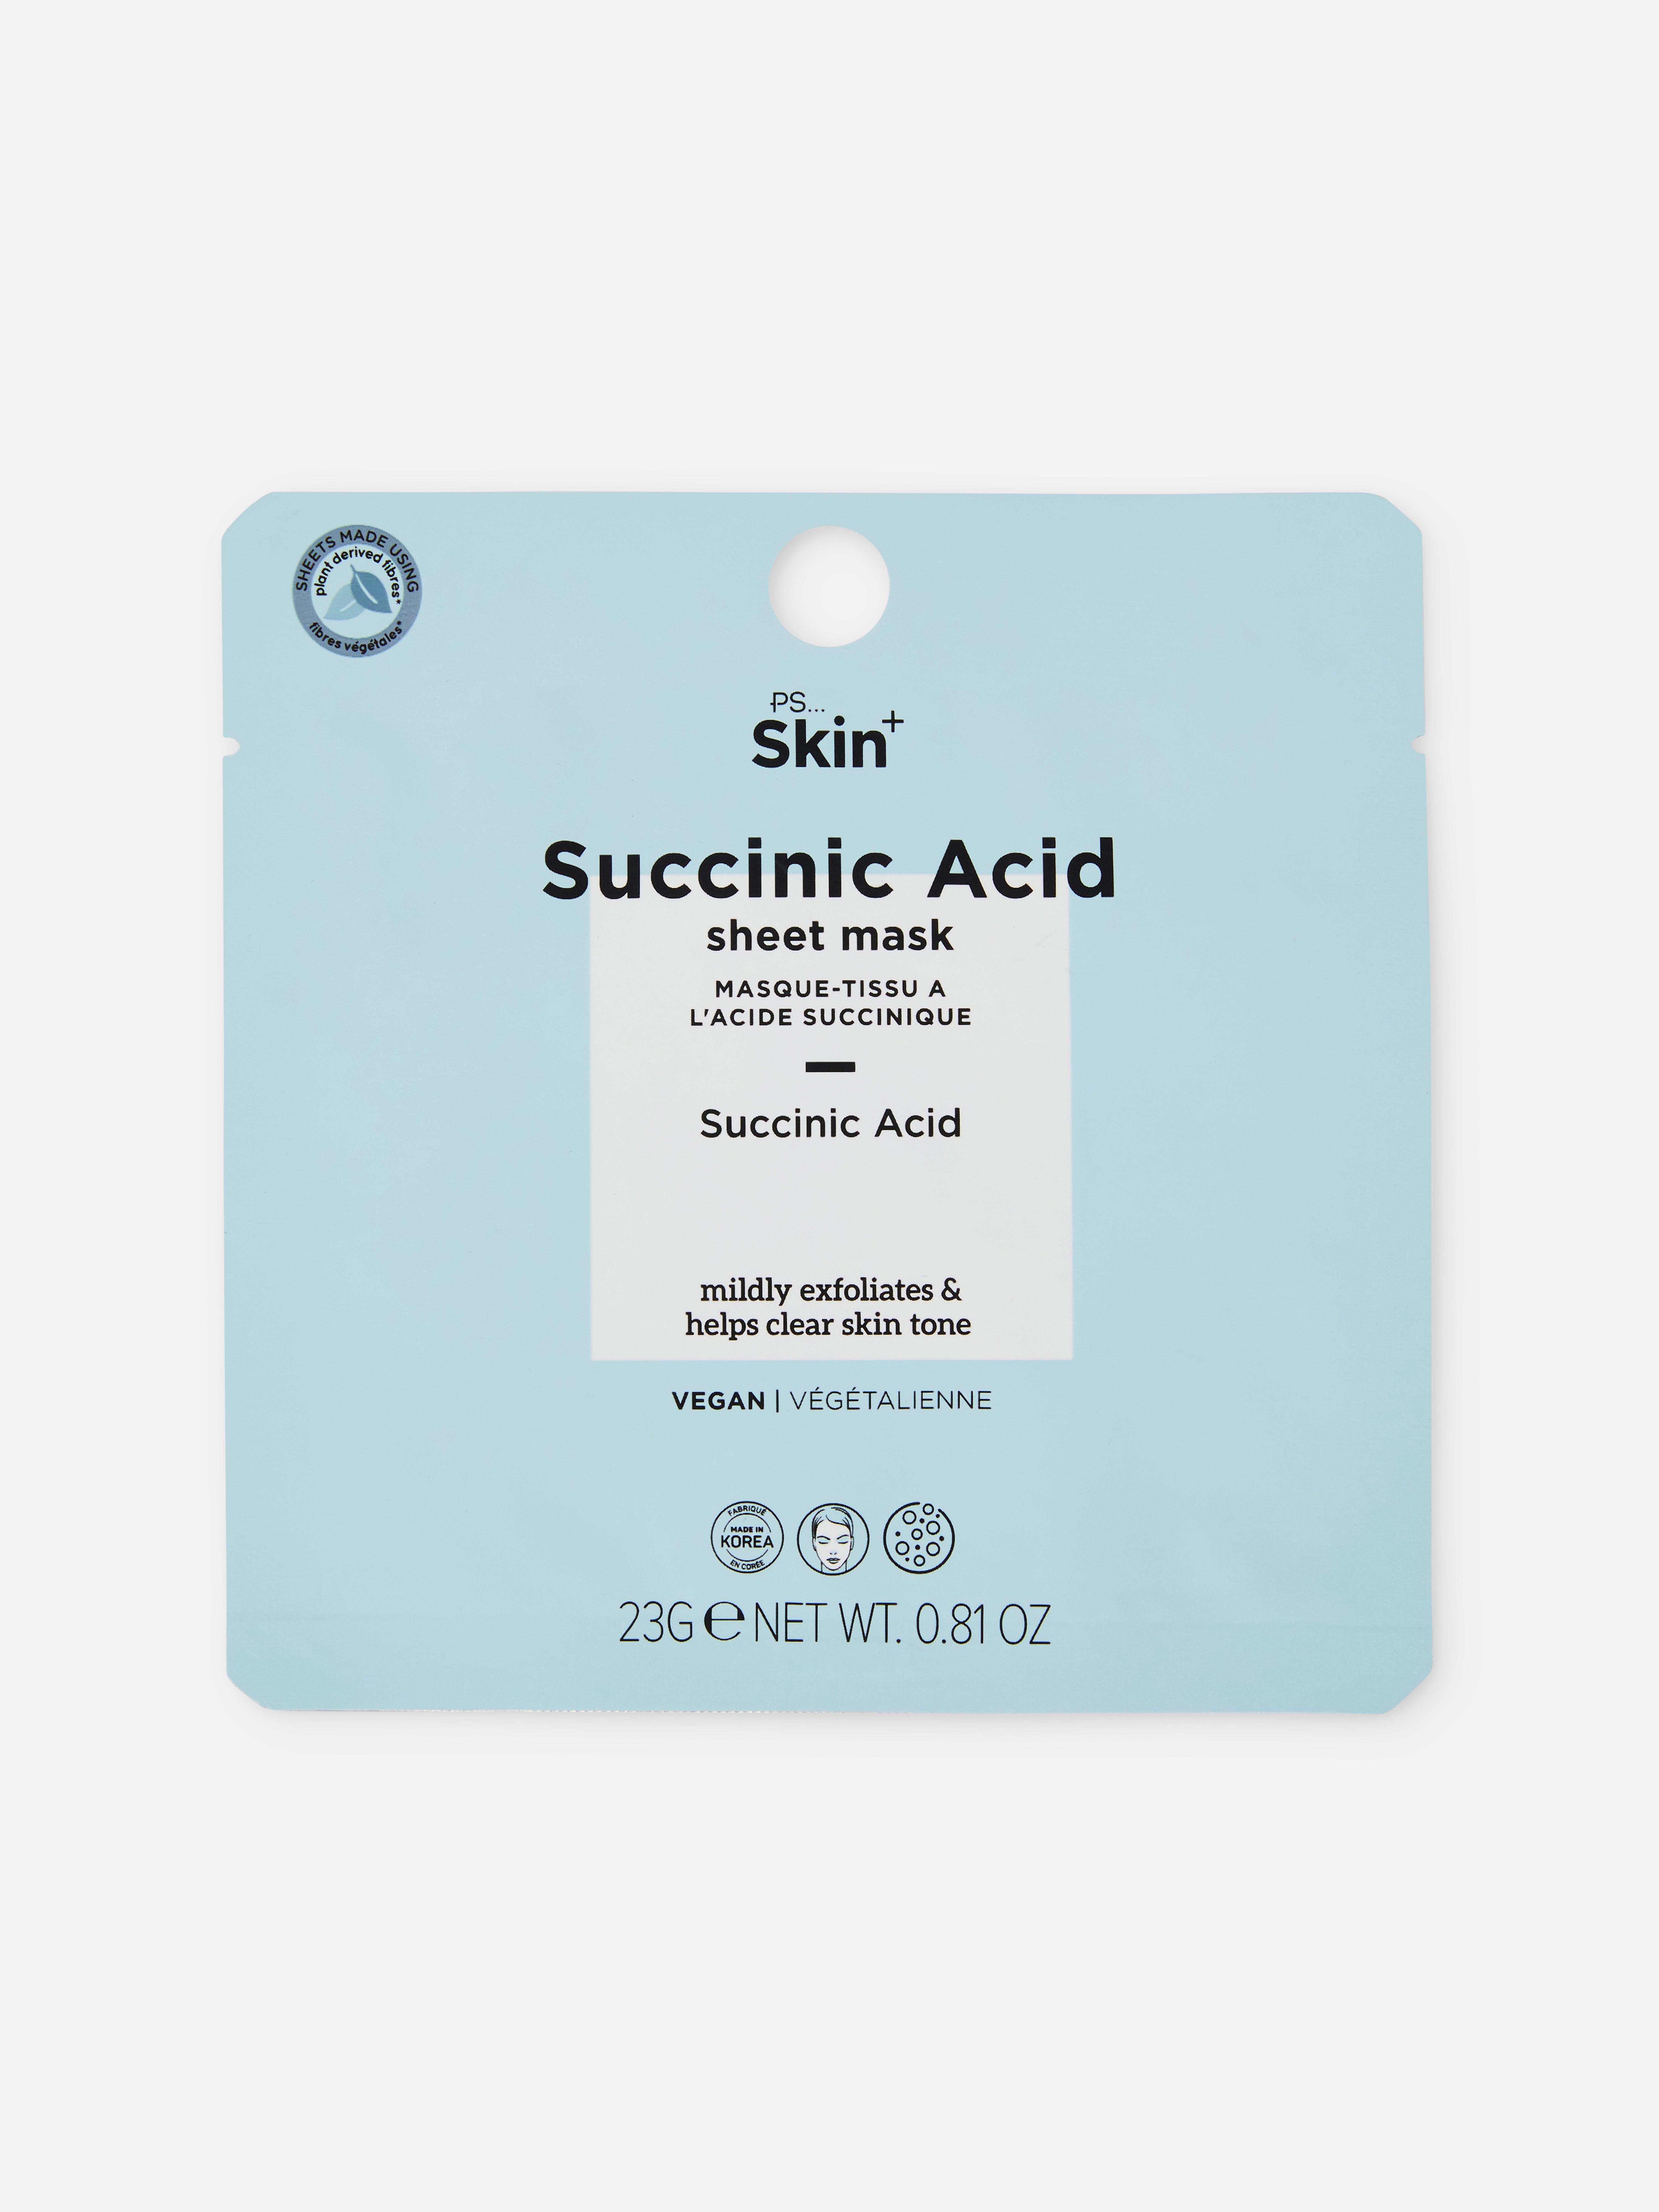 PS... Skin + Succinic Acid Sheet Mask